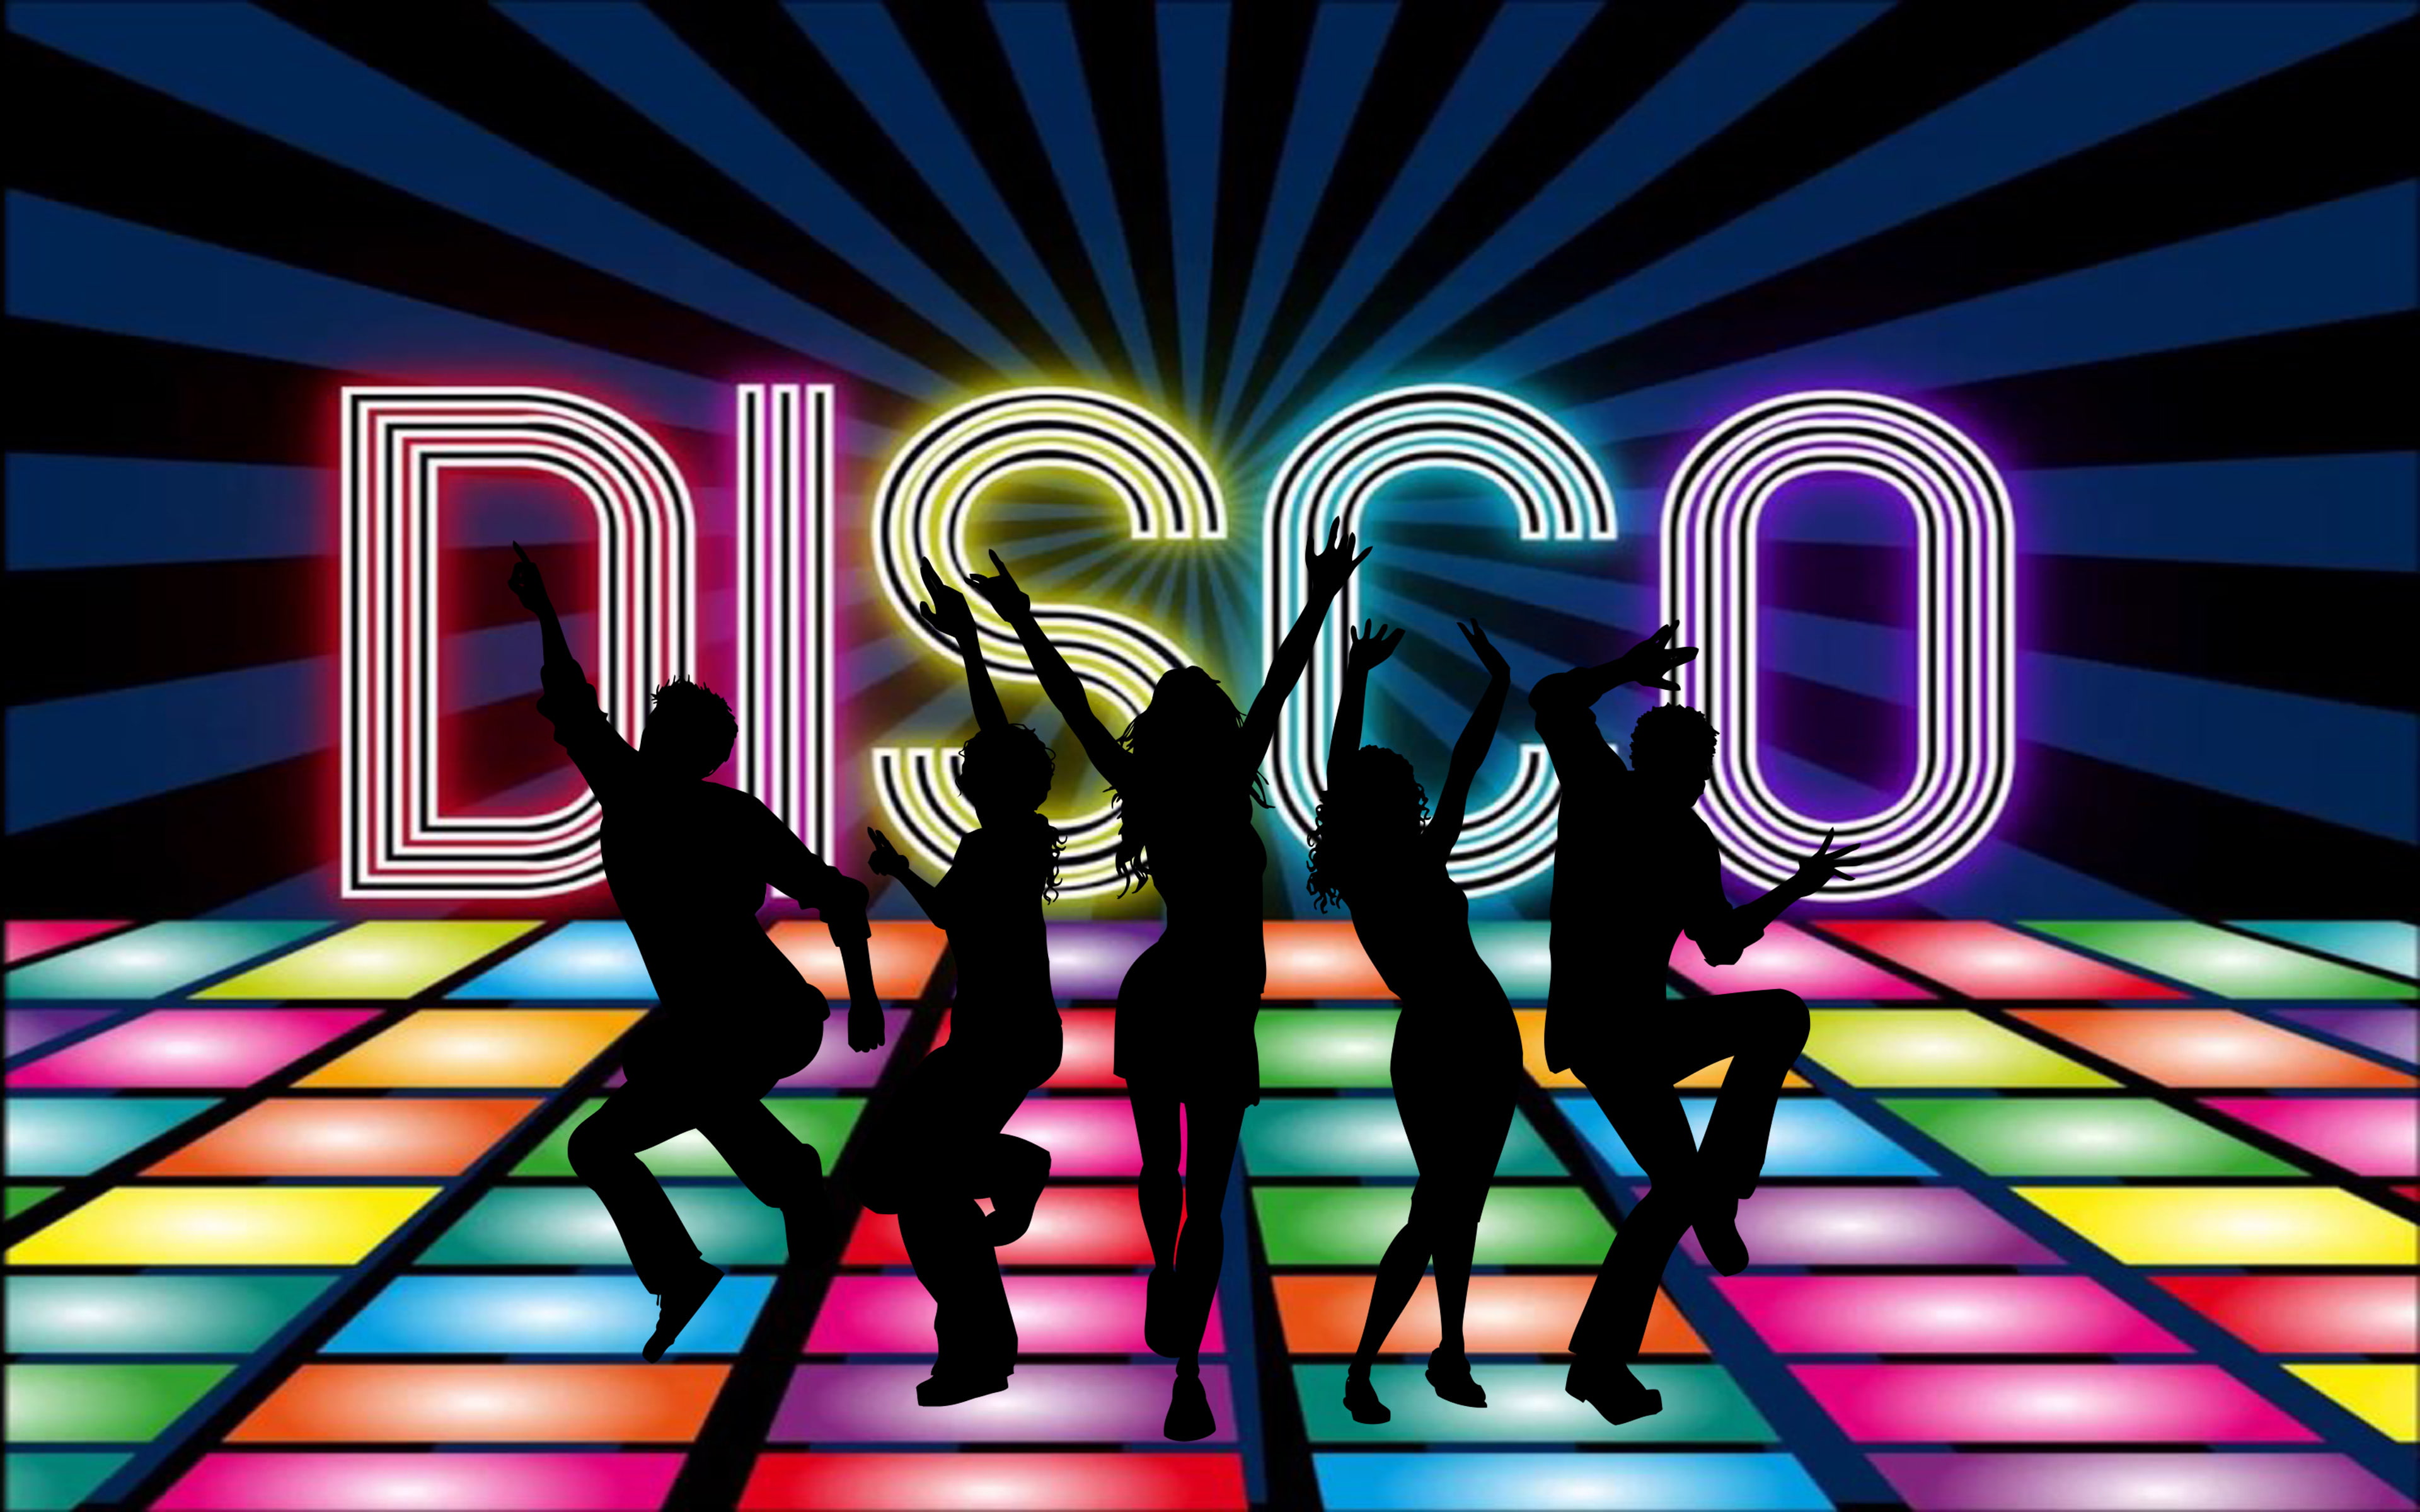 Disco Disco Music Disko Dancing 4k Ultra Hd Wallpaper For Desktop Laptop Tablet Mobile Phones And Tv 3840×2400